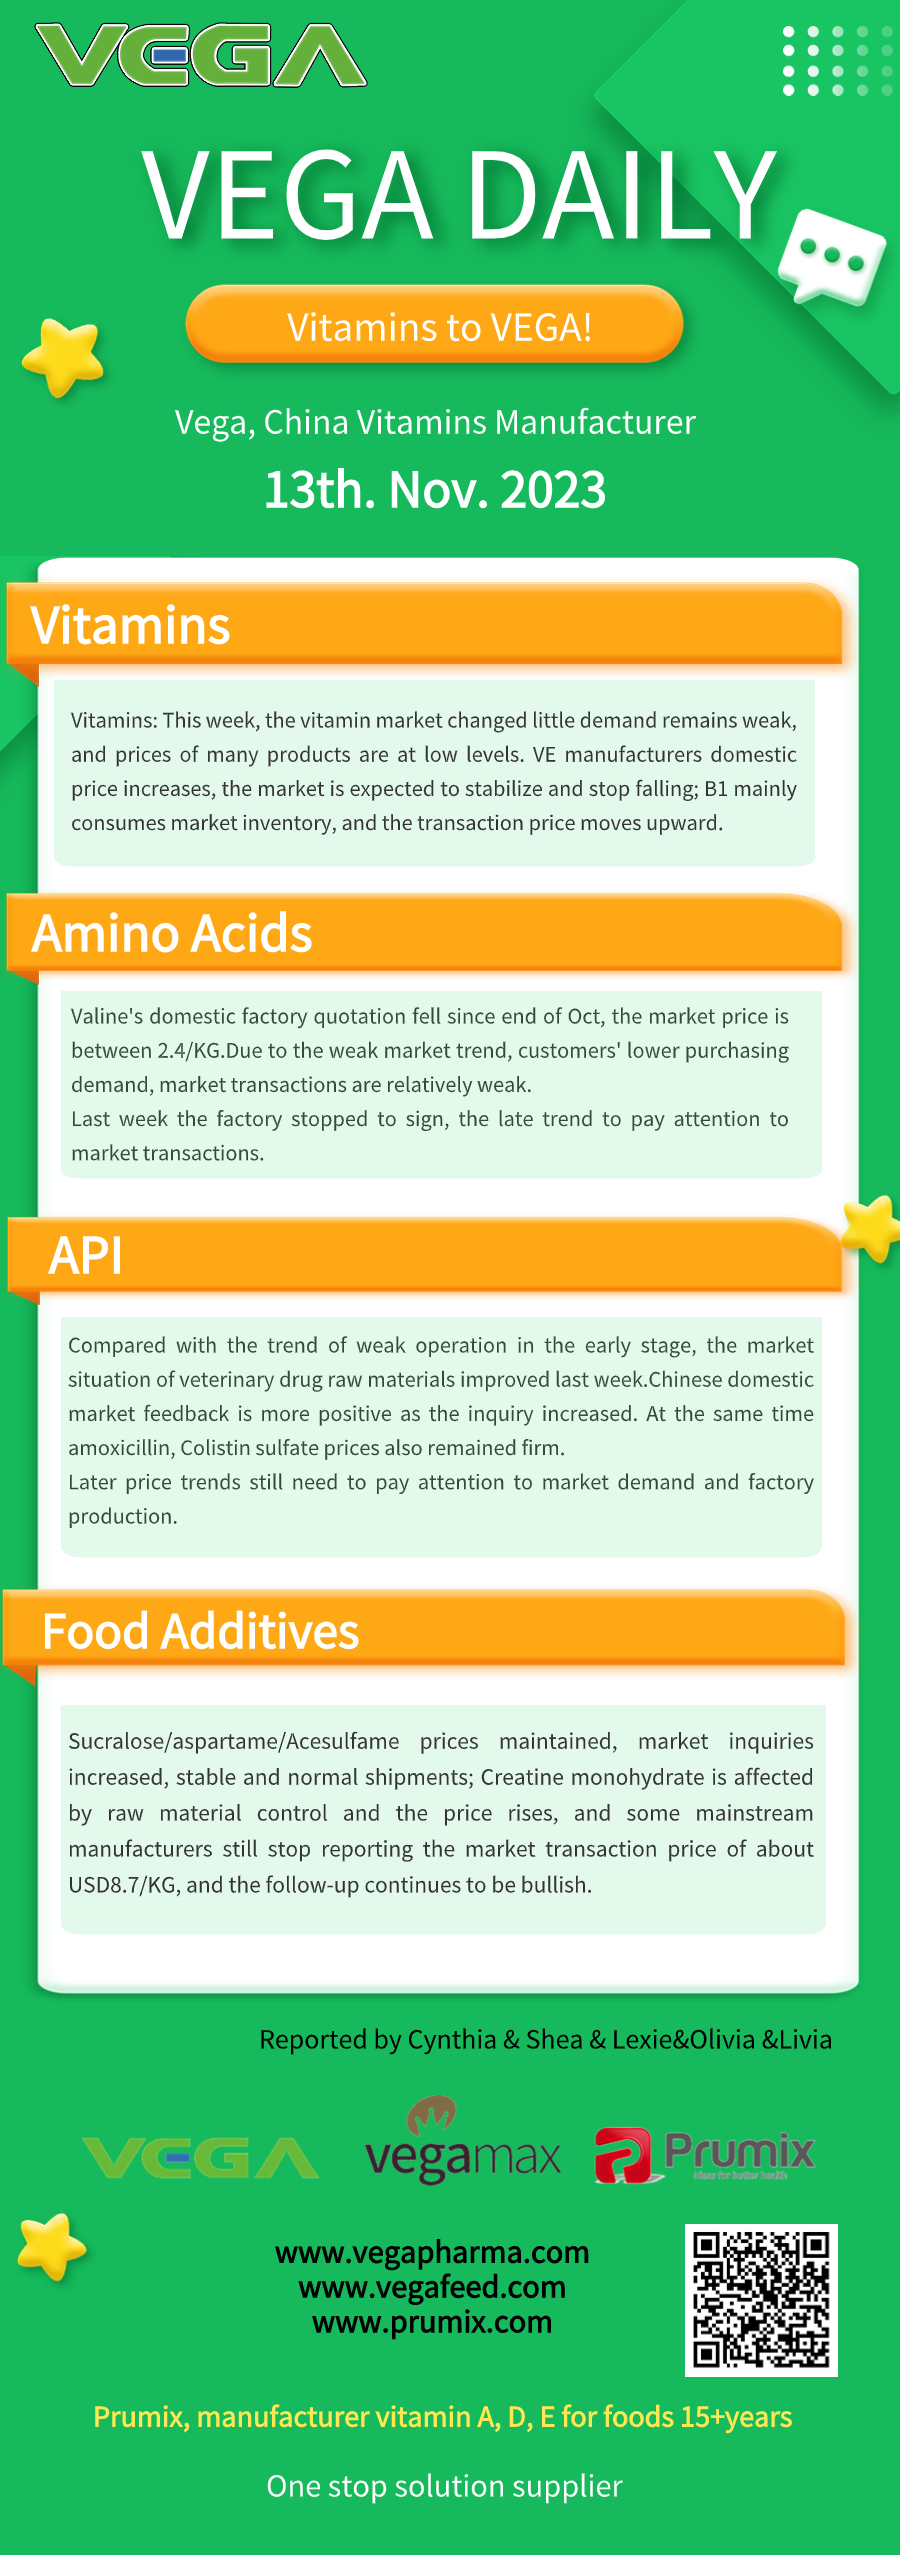 Vega Daily Dated on Nov 13th 2023 Vitamin Amino Acid API Food Additives.jpg